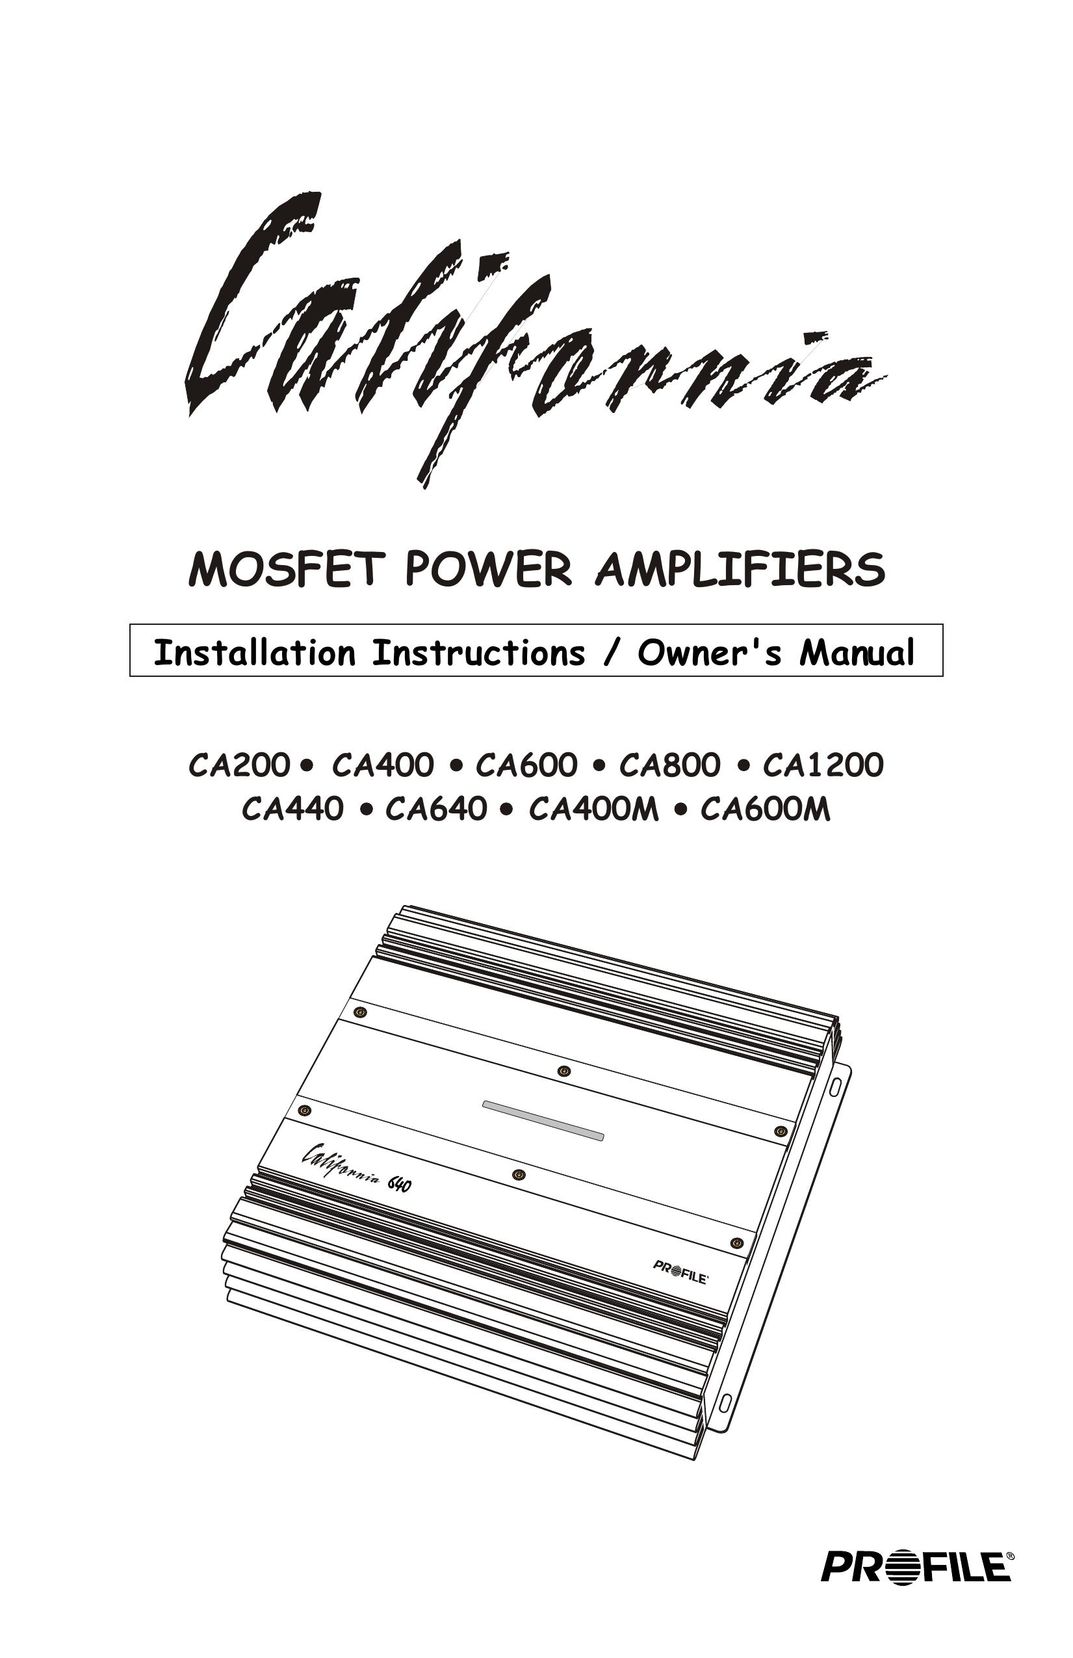 Profile CA1200 Stereo Amplifier User Manual